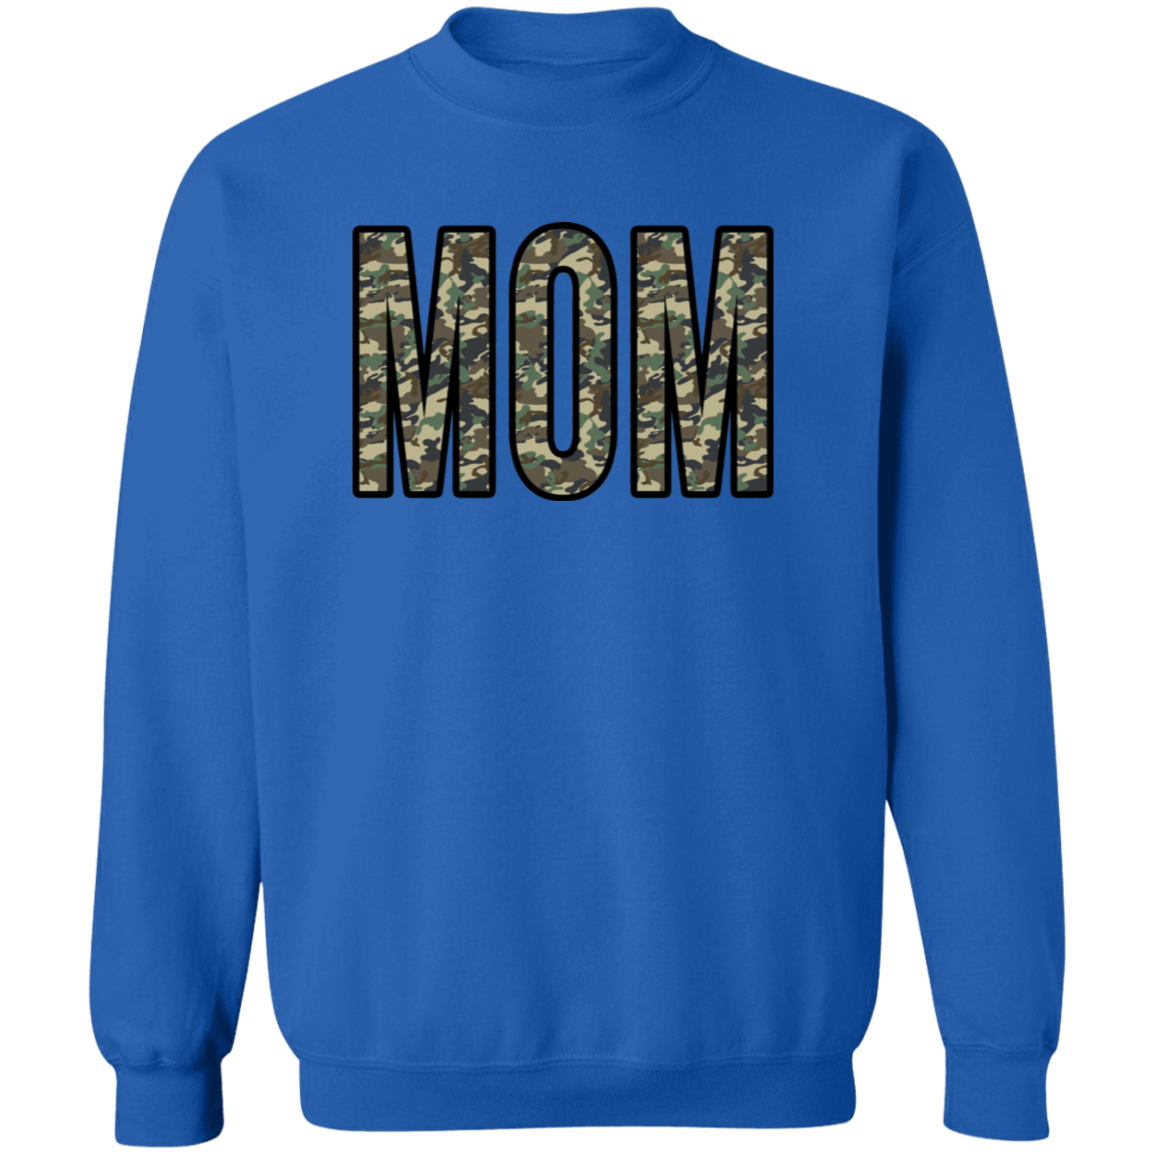 Mom Camo Sweatshirt